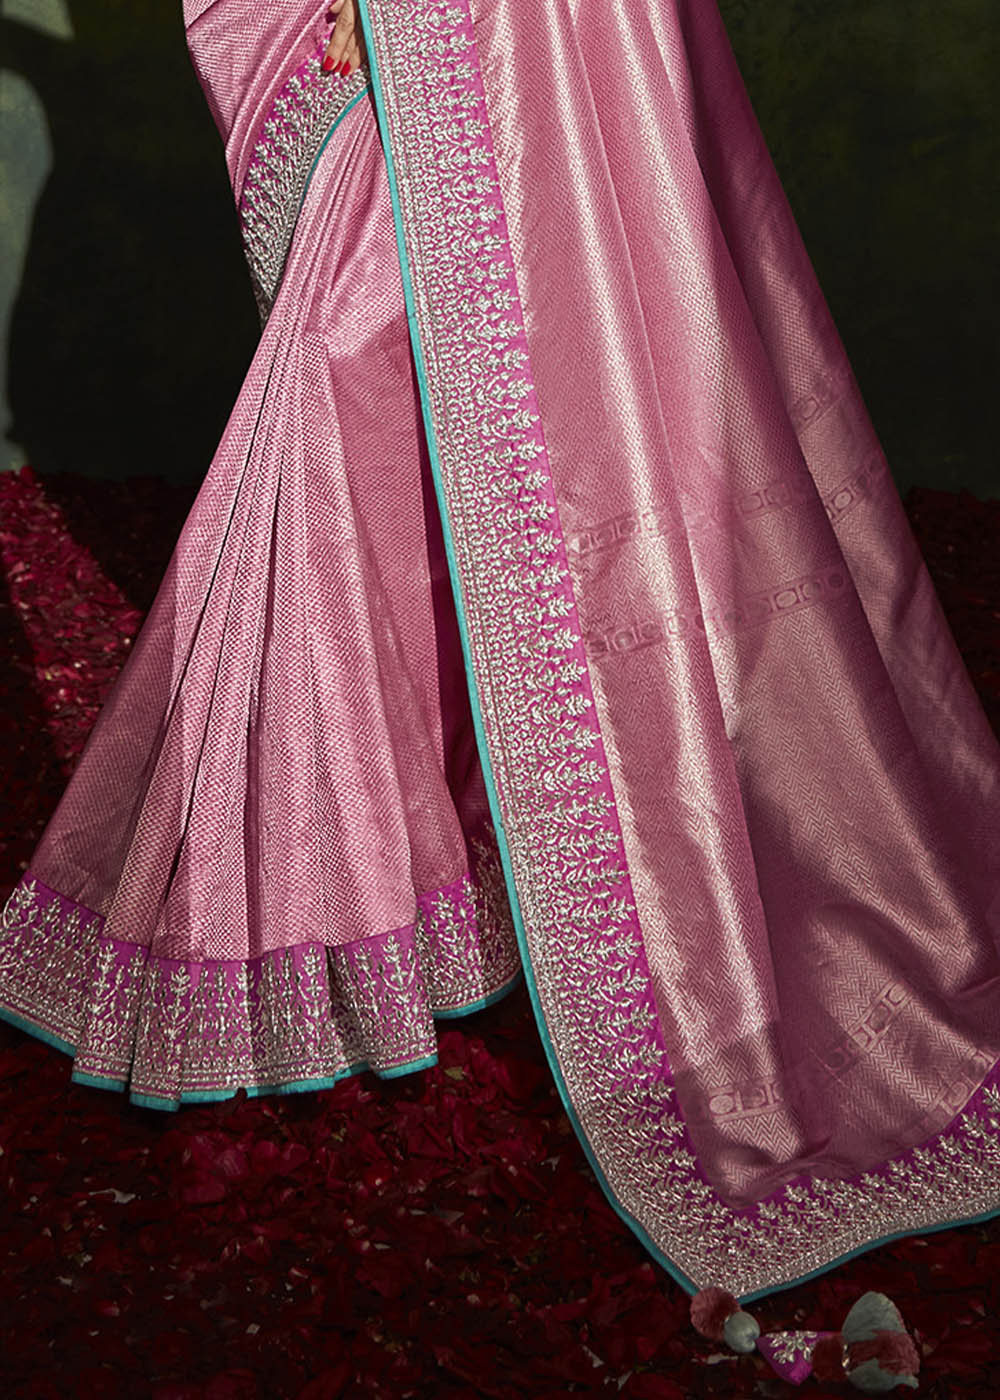 Graceful Elegance of the Pink Designer Silk Saree